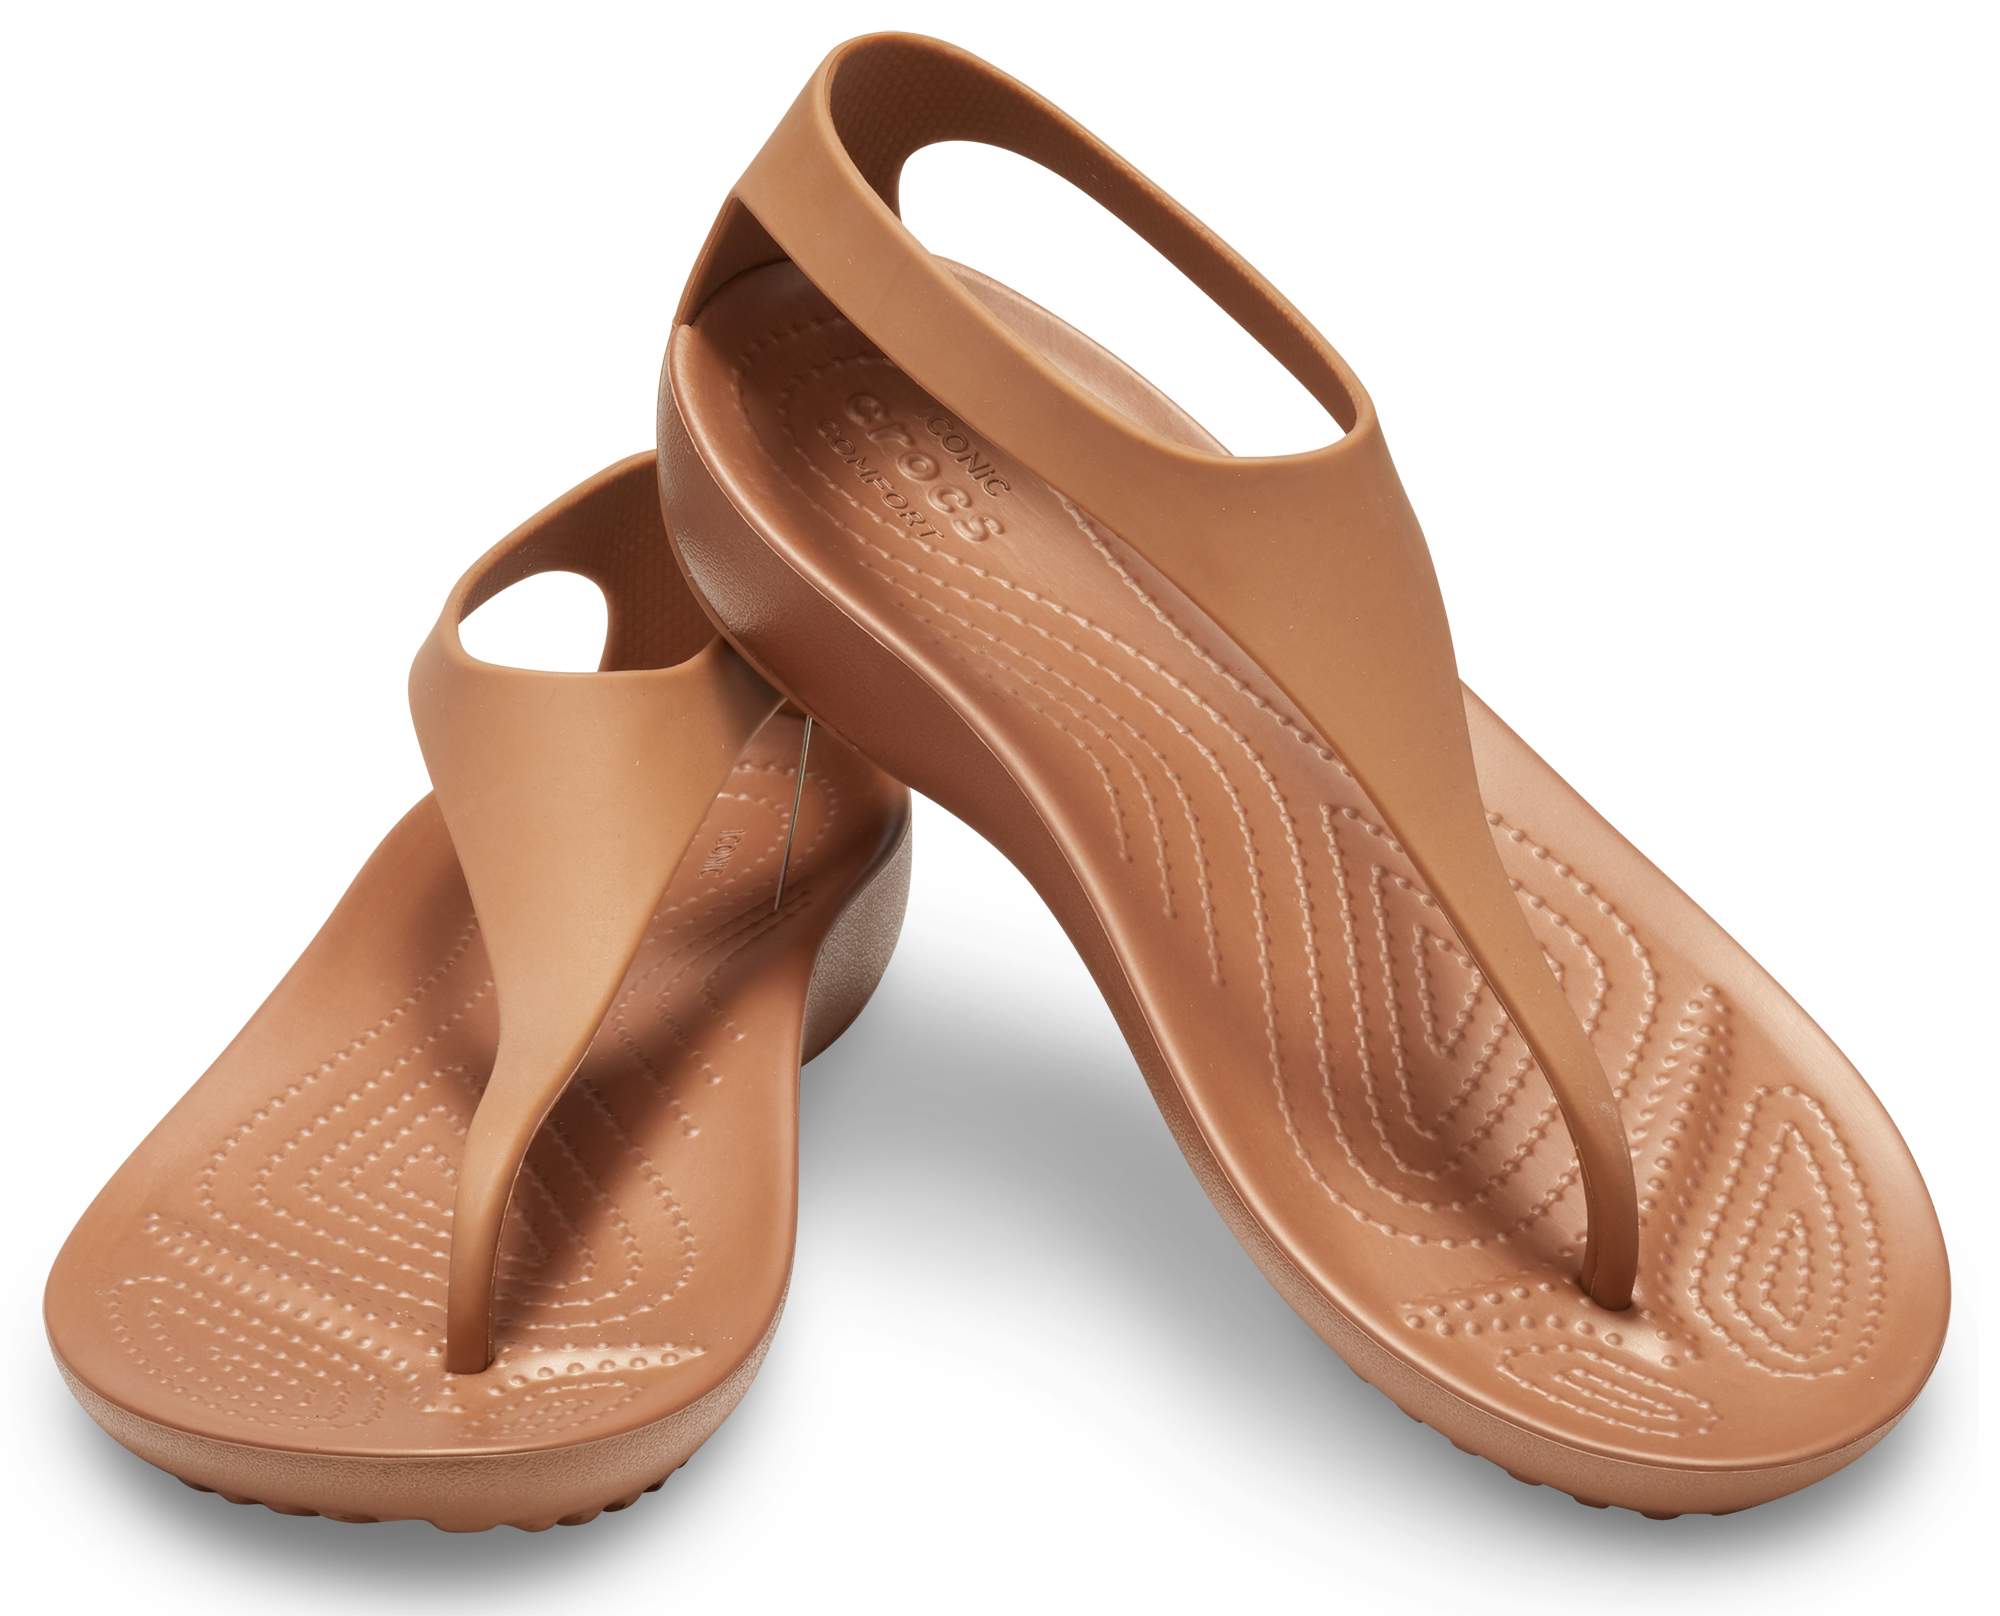 crocs serena sandal